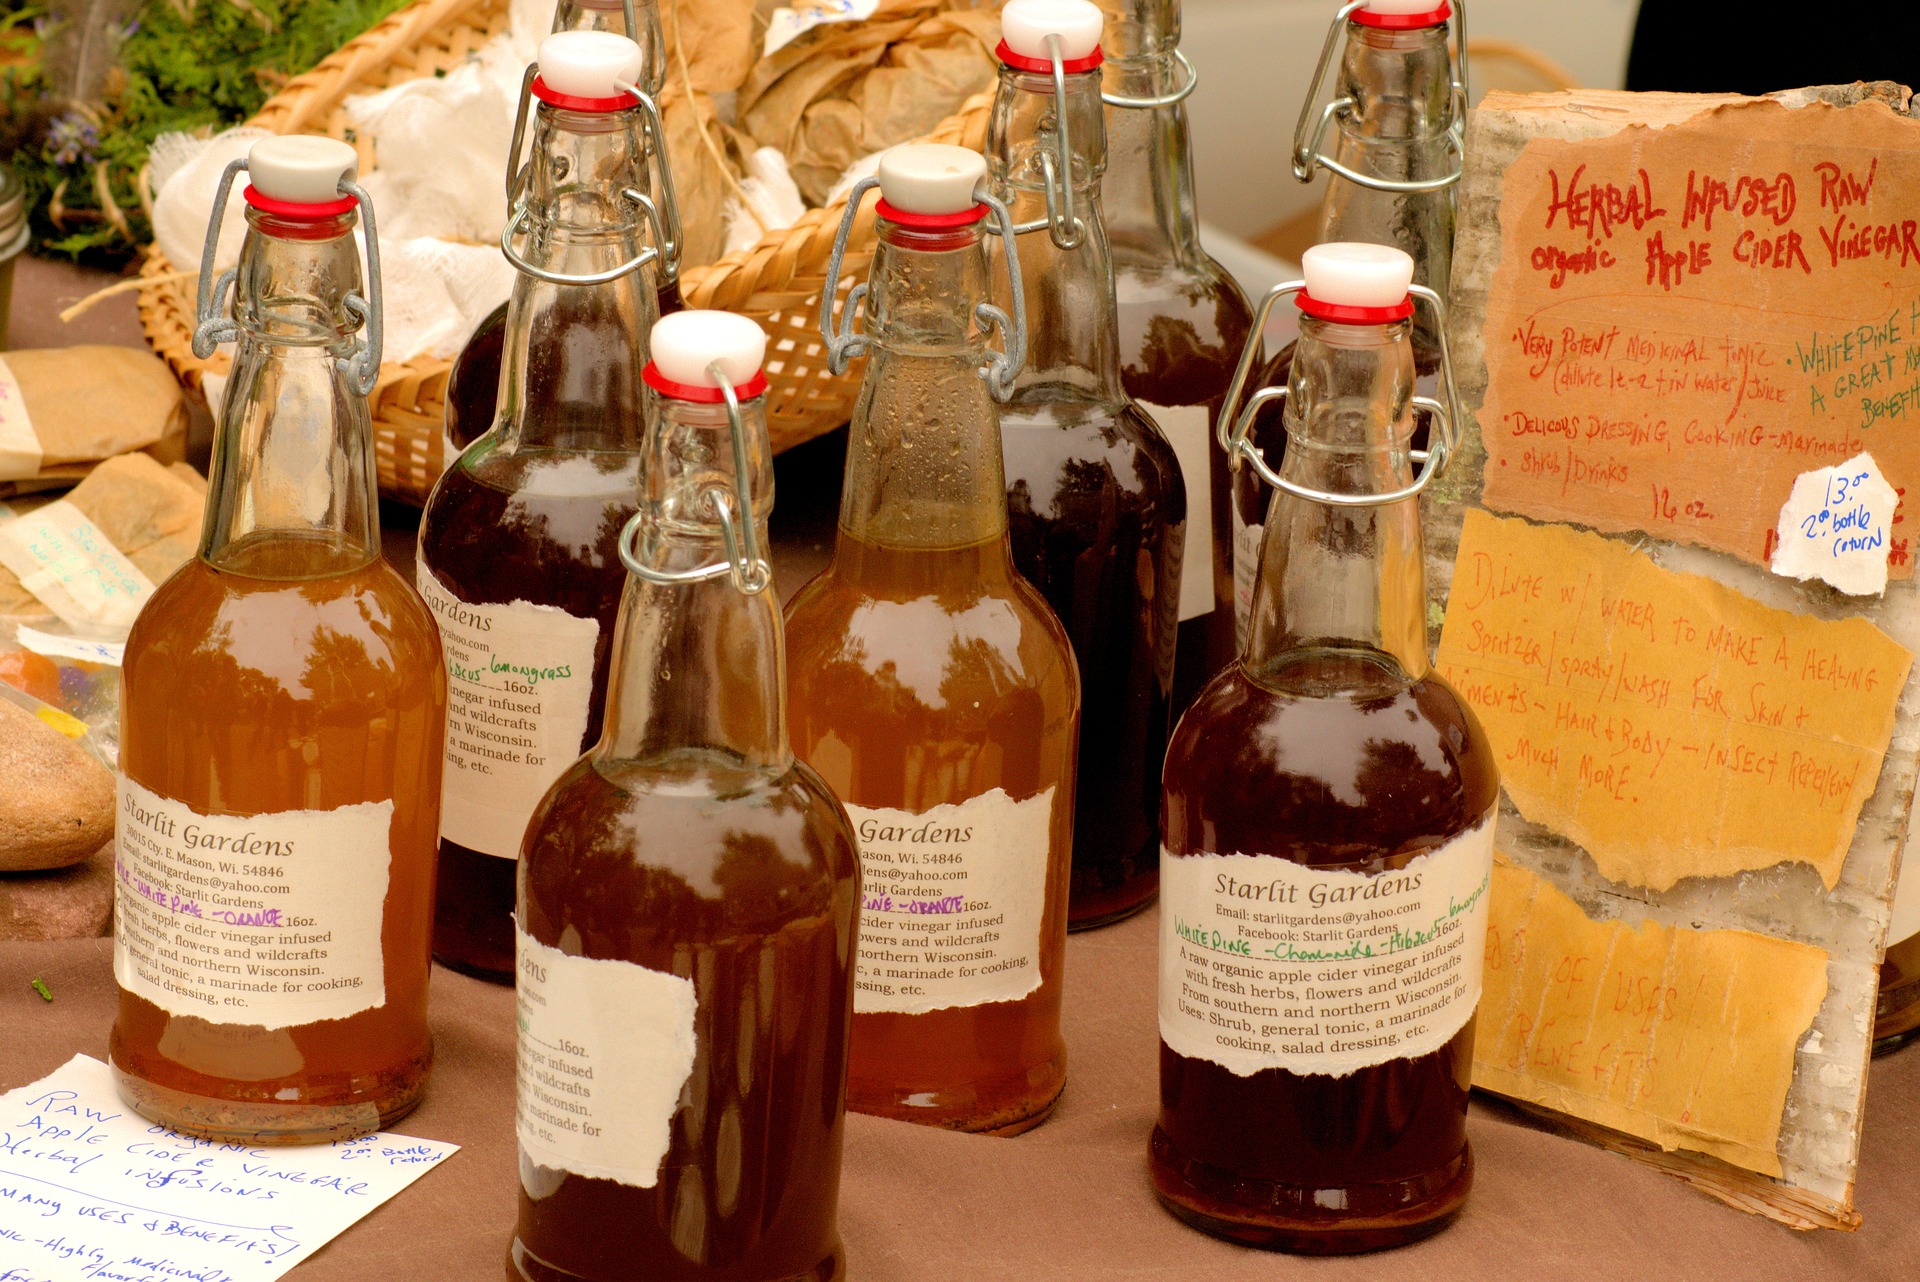 Benefits of Drinking Apple Cider Vinegar